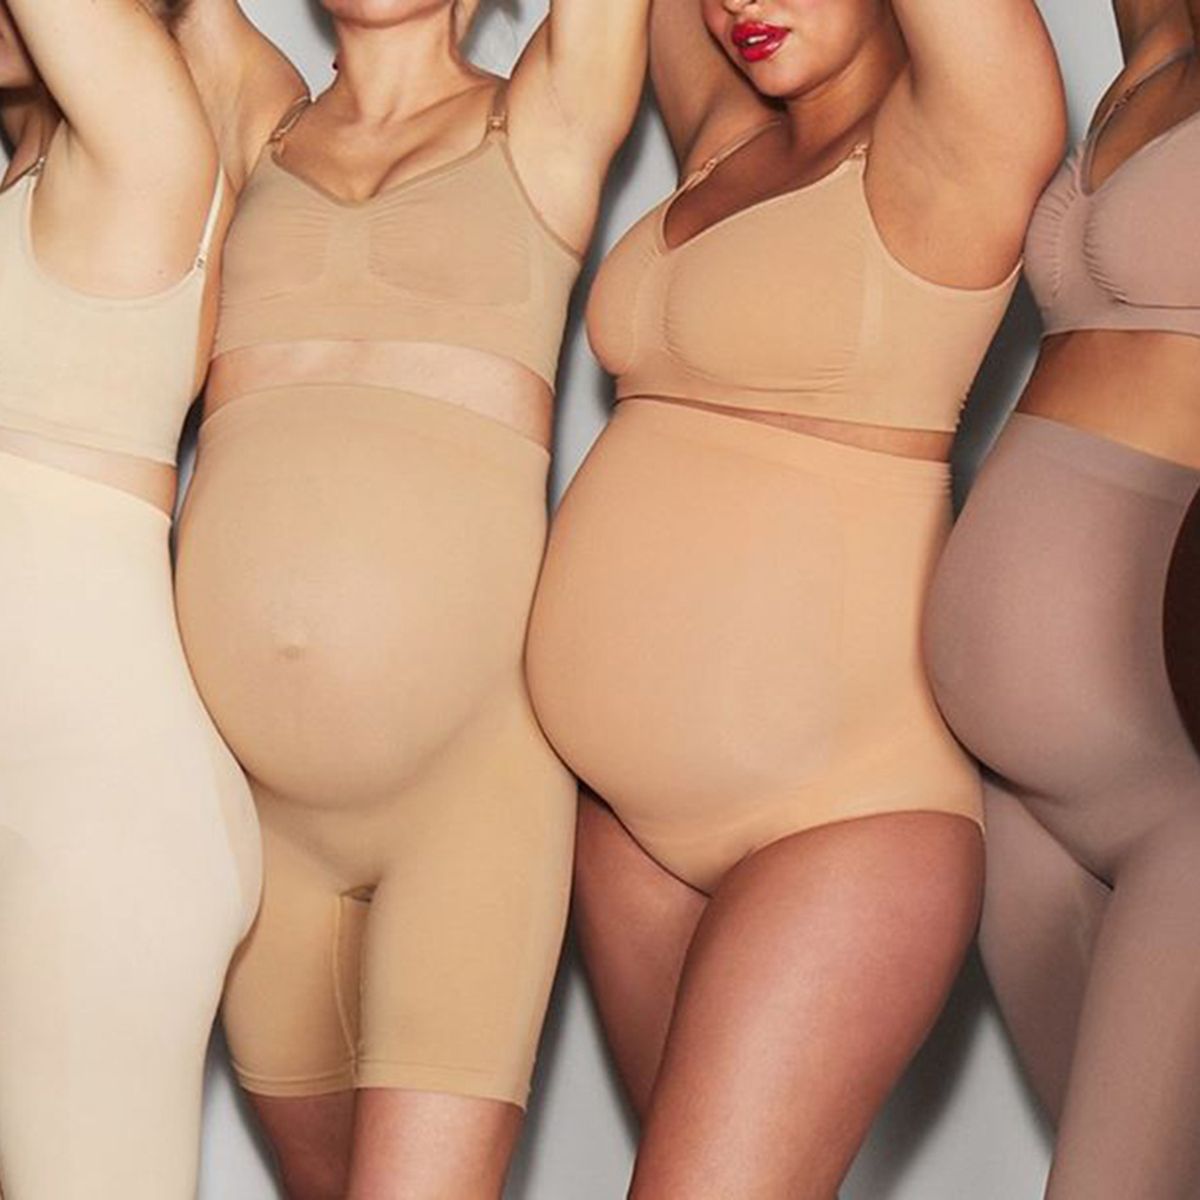 Kim Kardashian West responds to criticism of Skims maternity